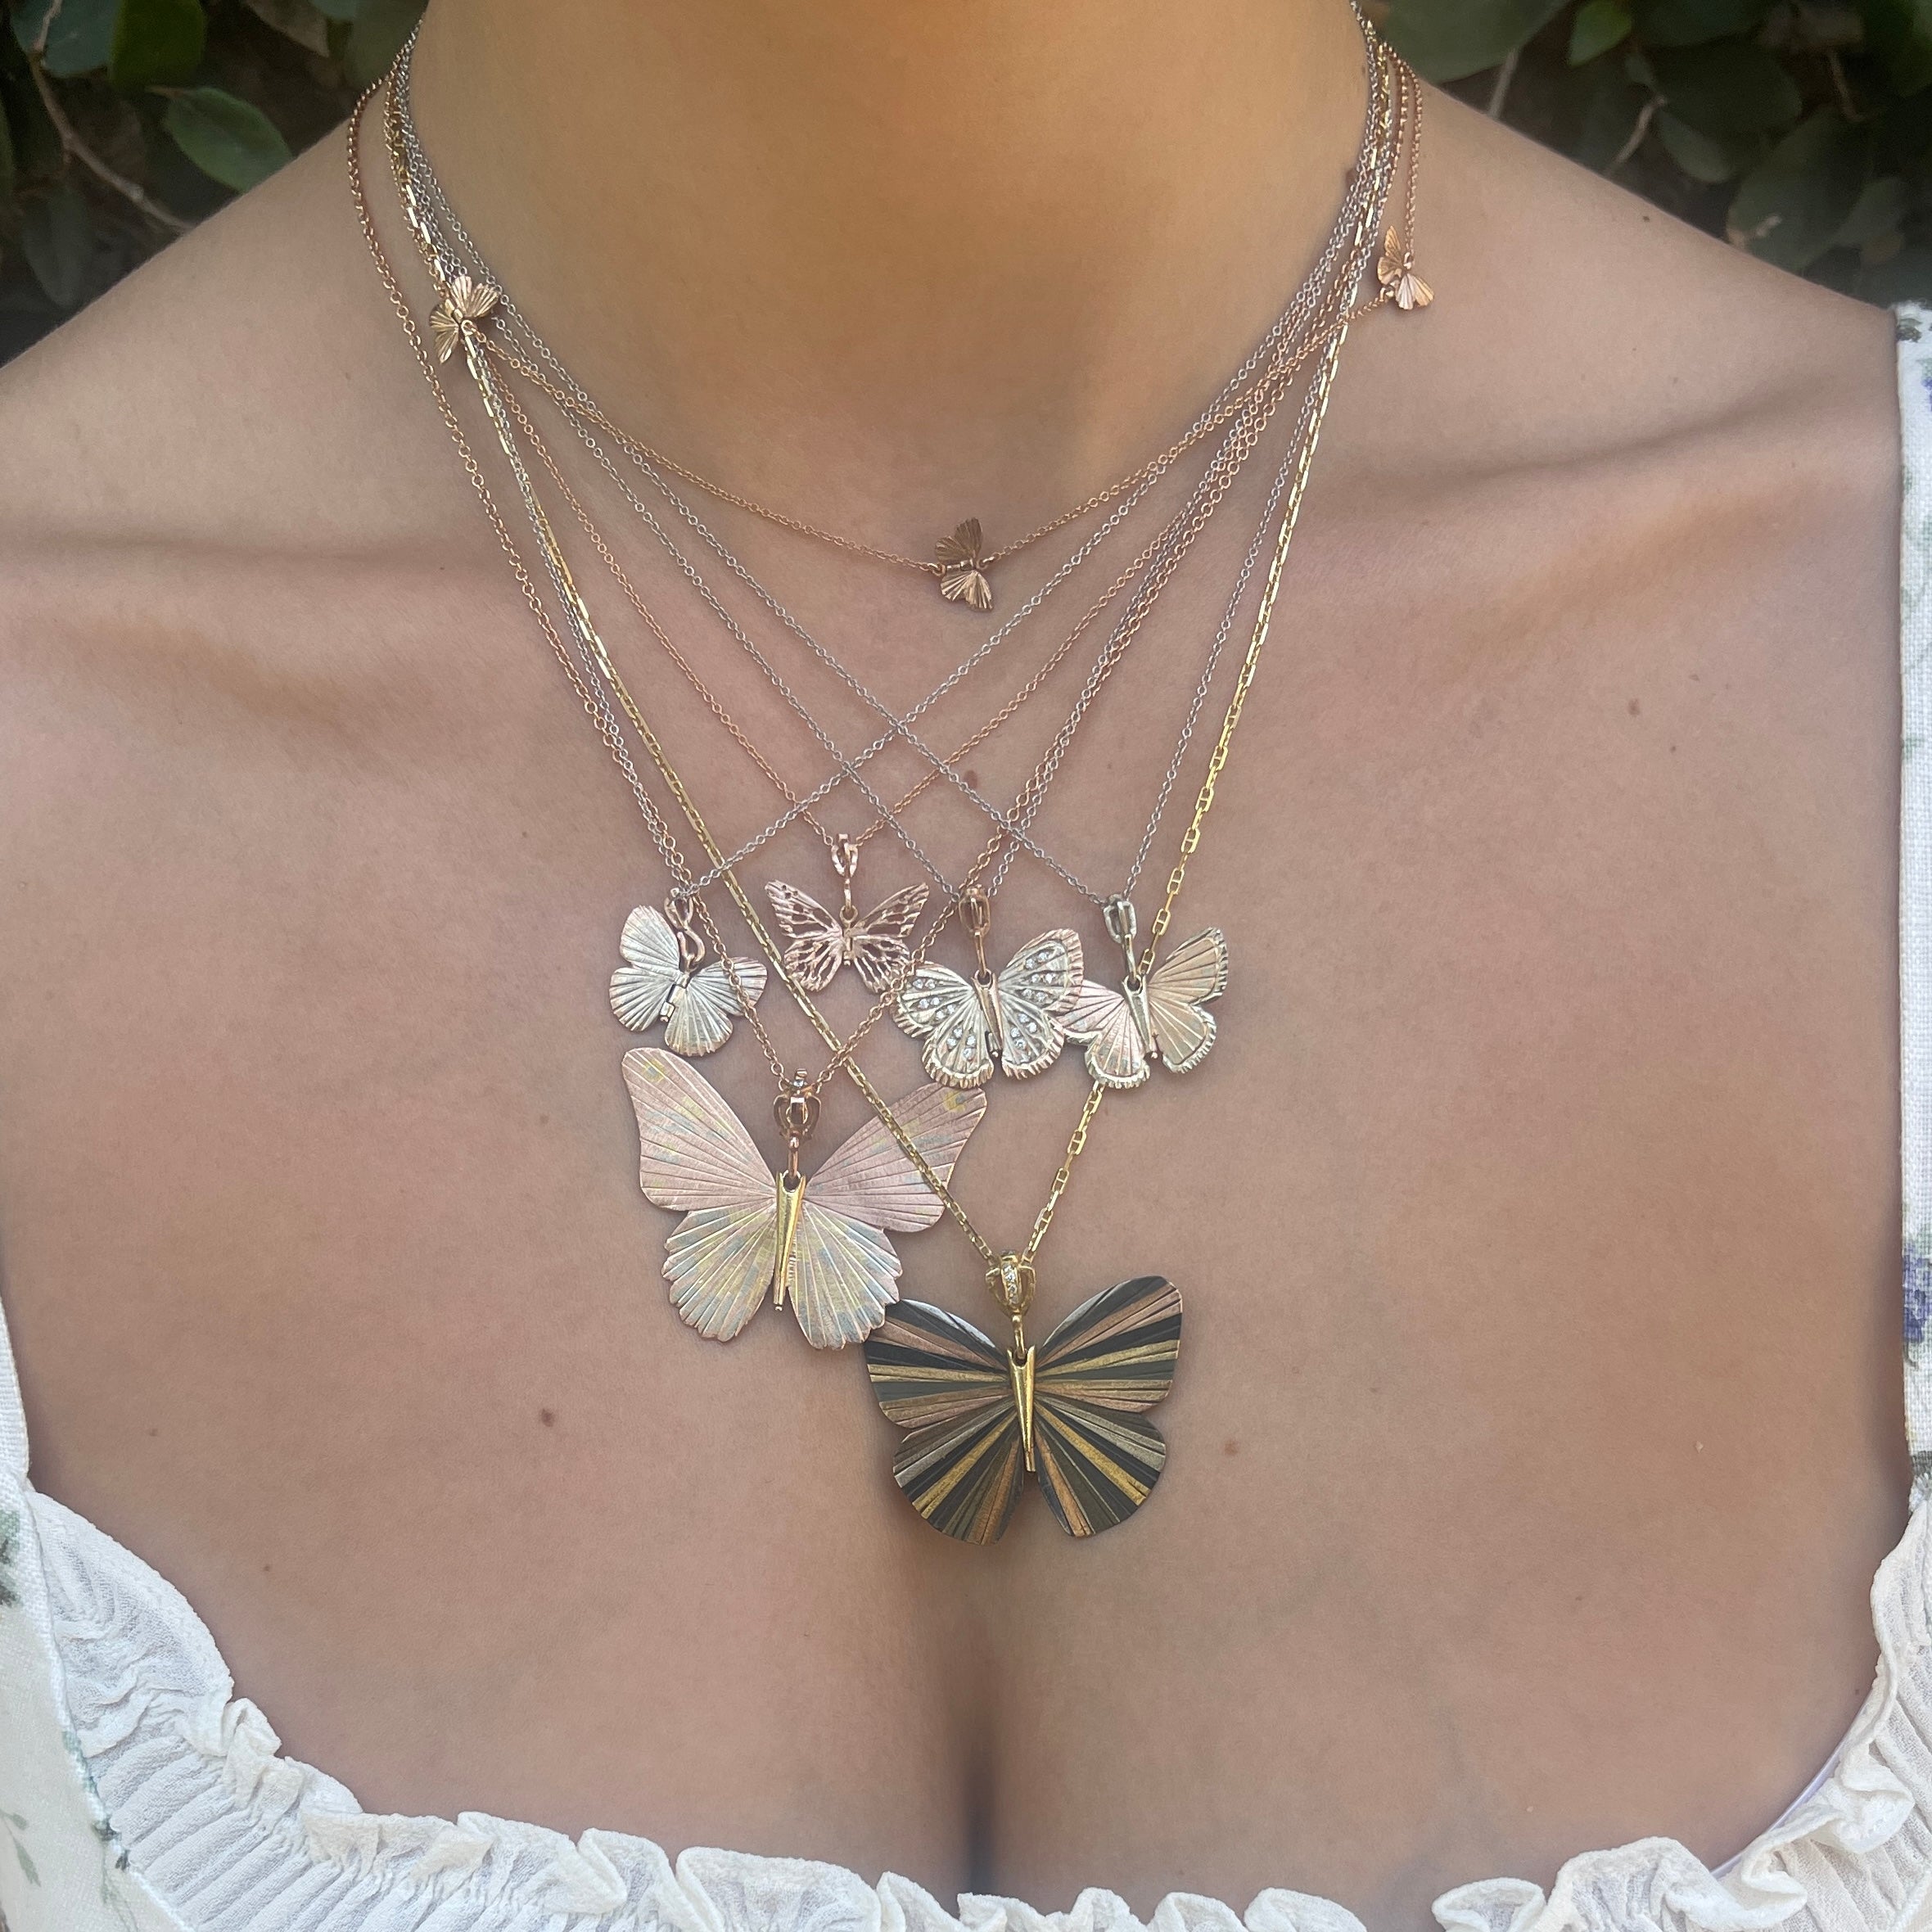 Palos Verde Butterfly Necklace Pendant James Banks Design   